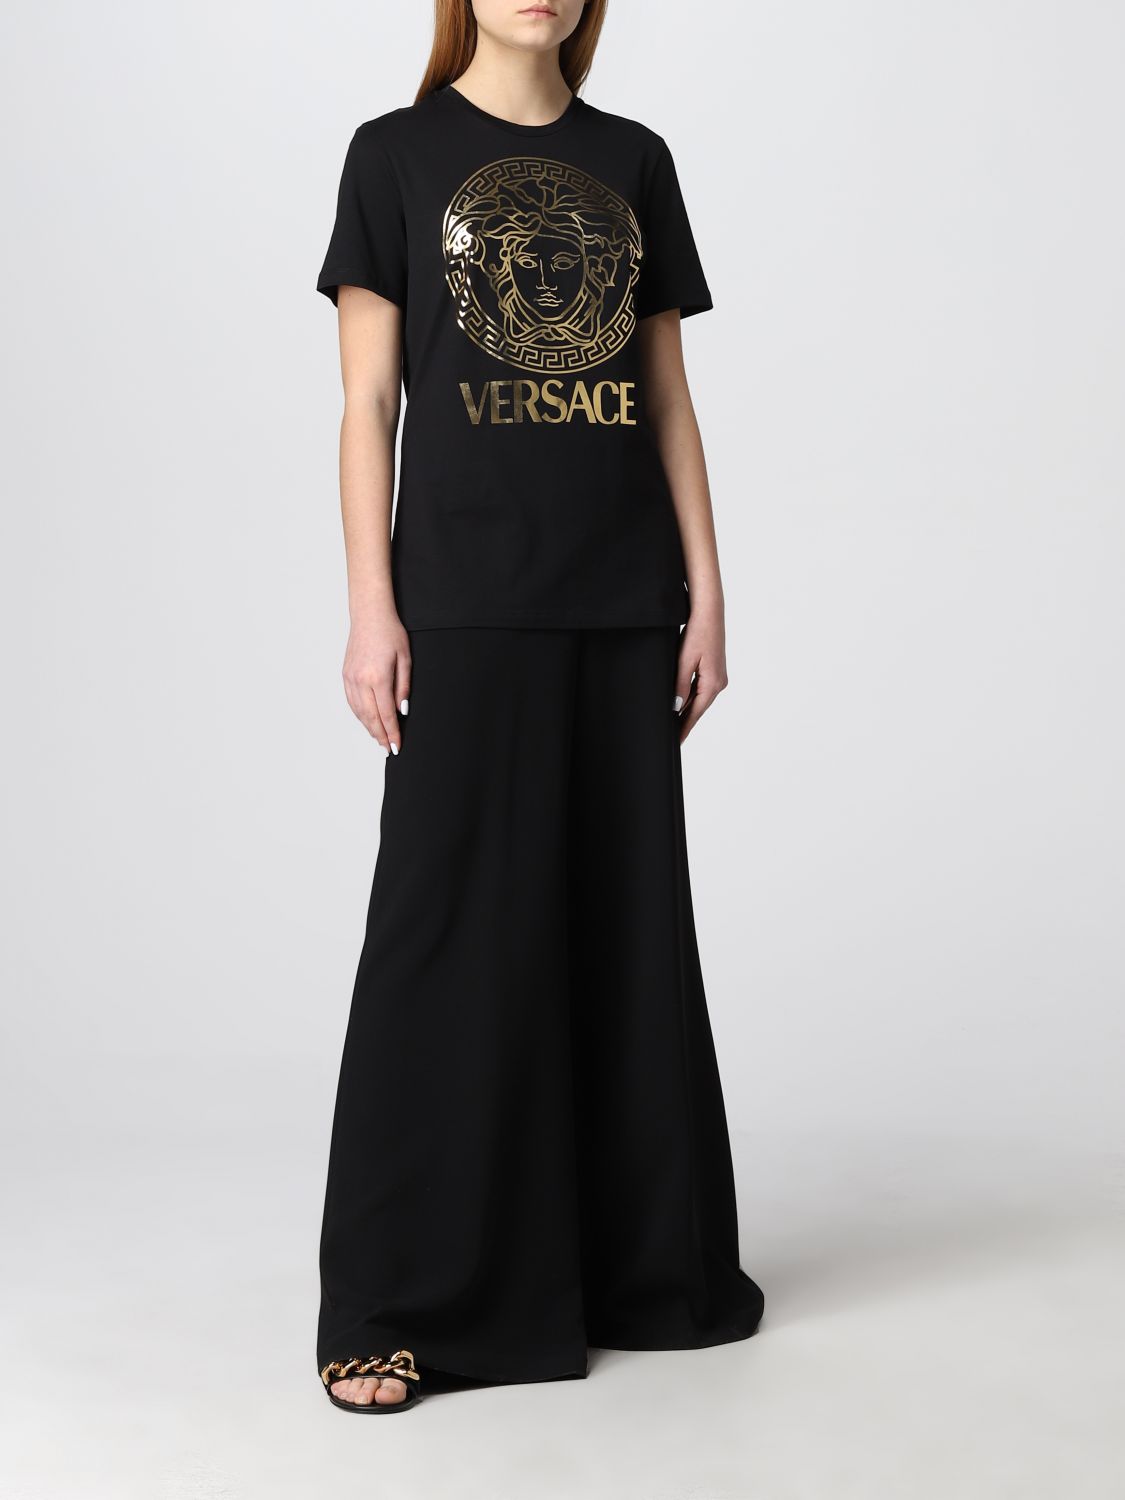 Versace T-shirt - Medusa - Black/White » Quick Shipping